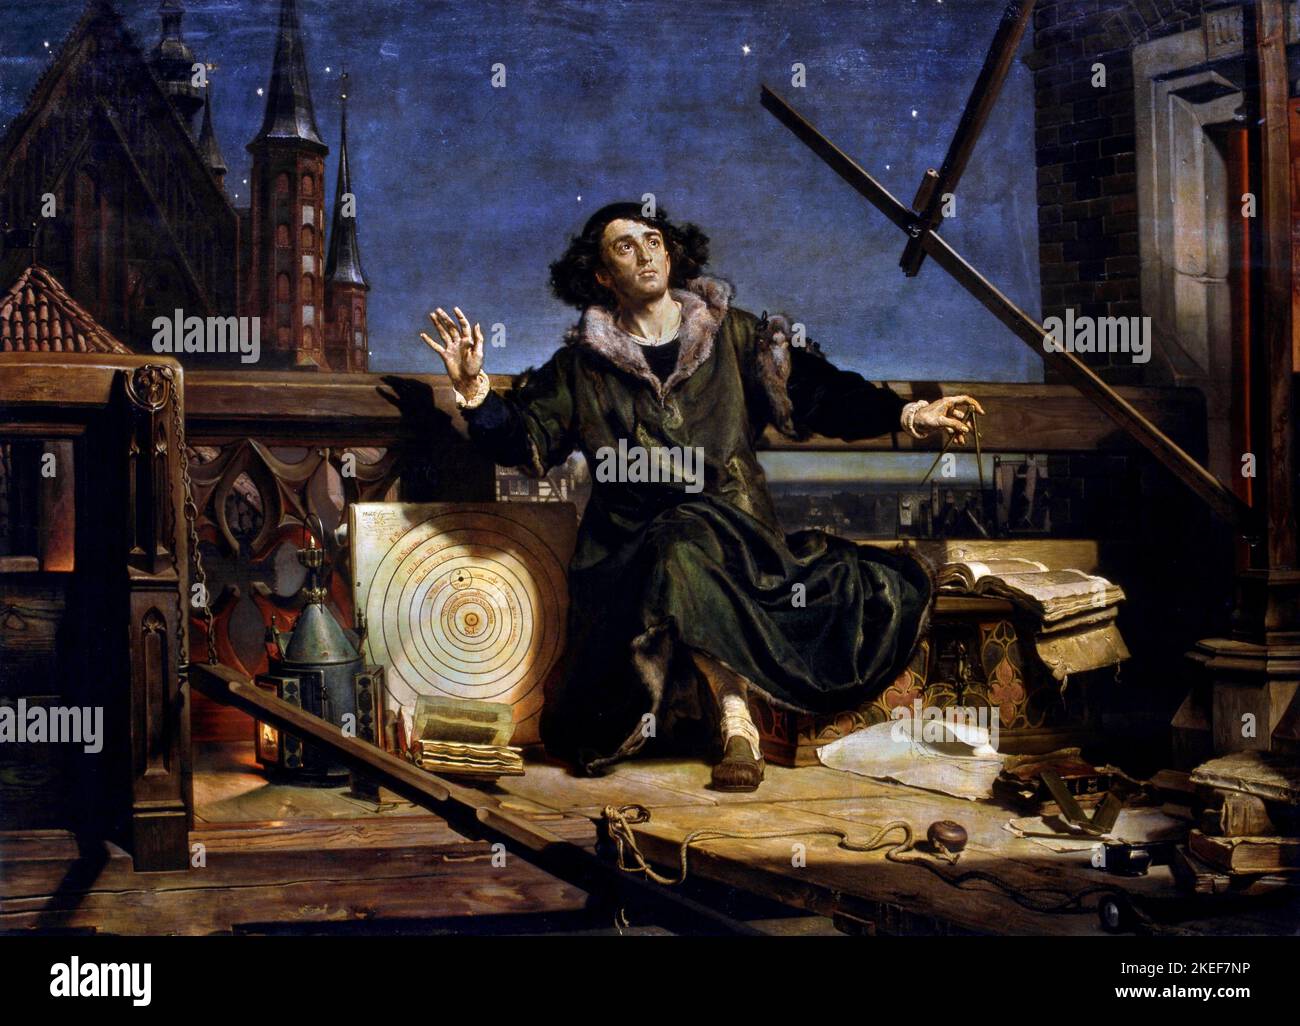 Jan Matejko, Astronomer Copernicus, or Conversations with God, 1872, Oil on canvas, Jagiellonian University Museum, Krakow, Poland. Stock Photo